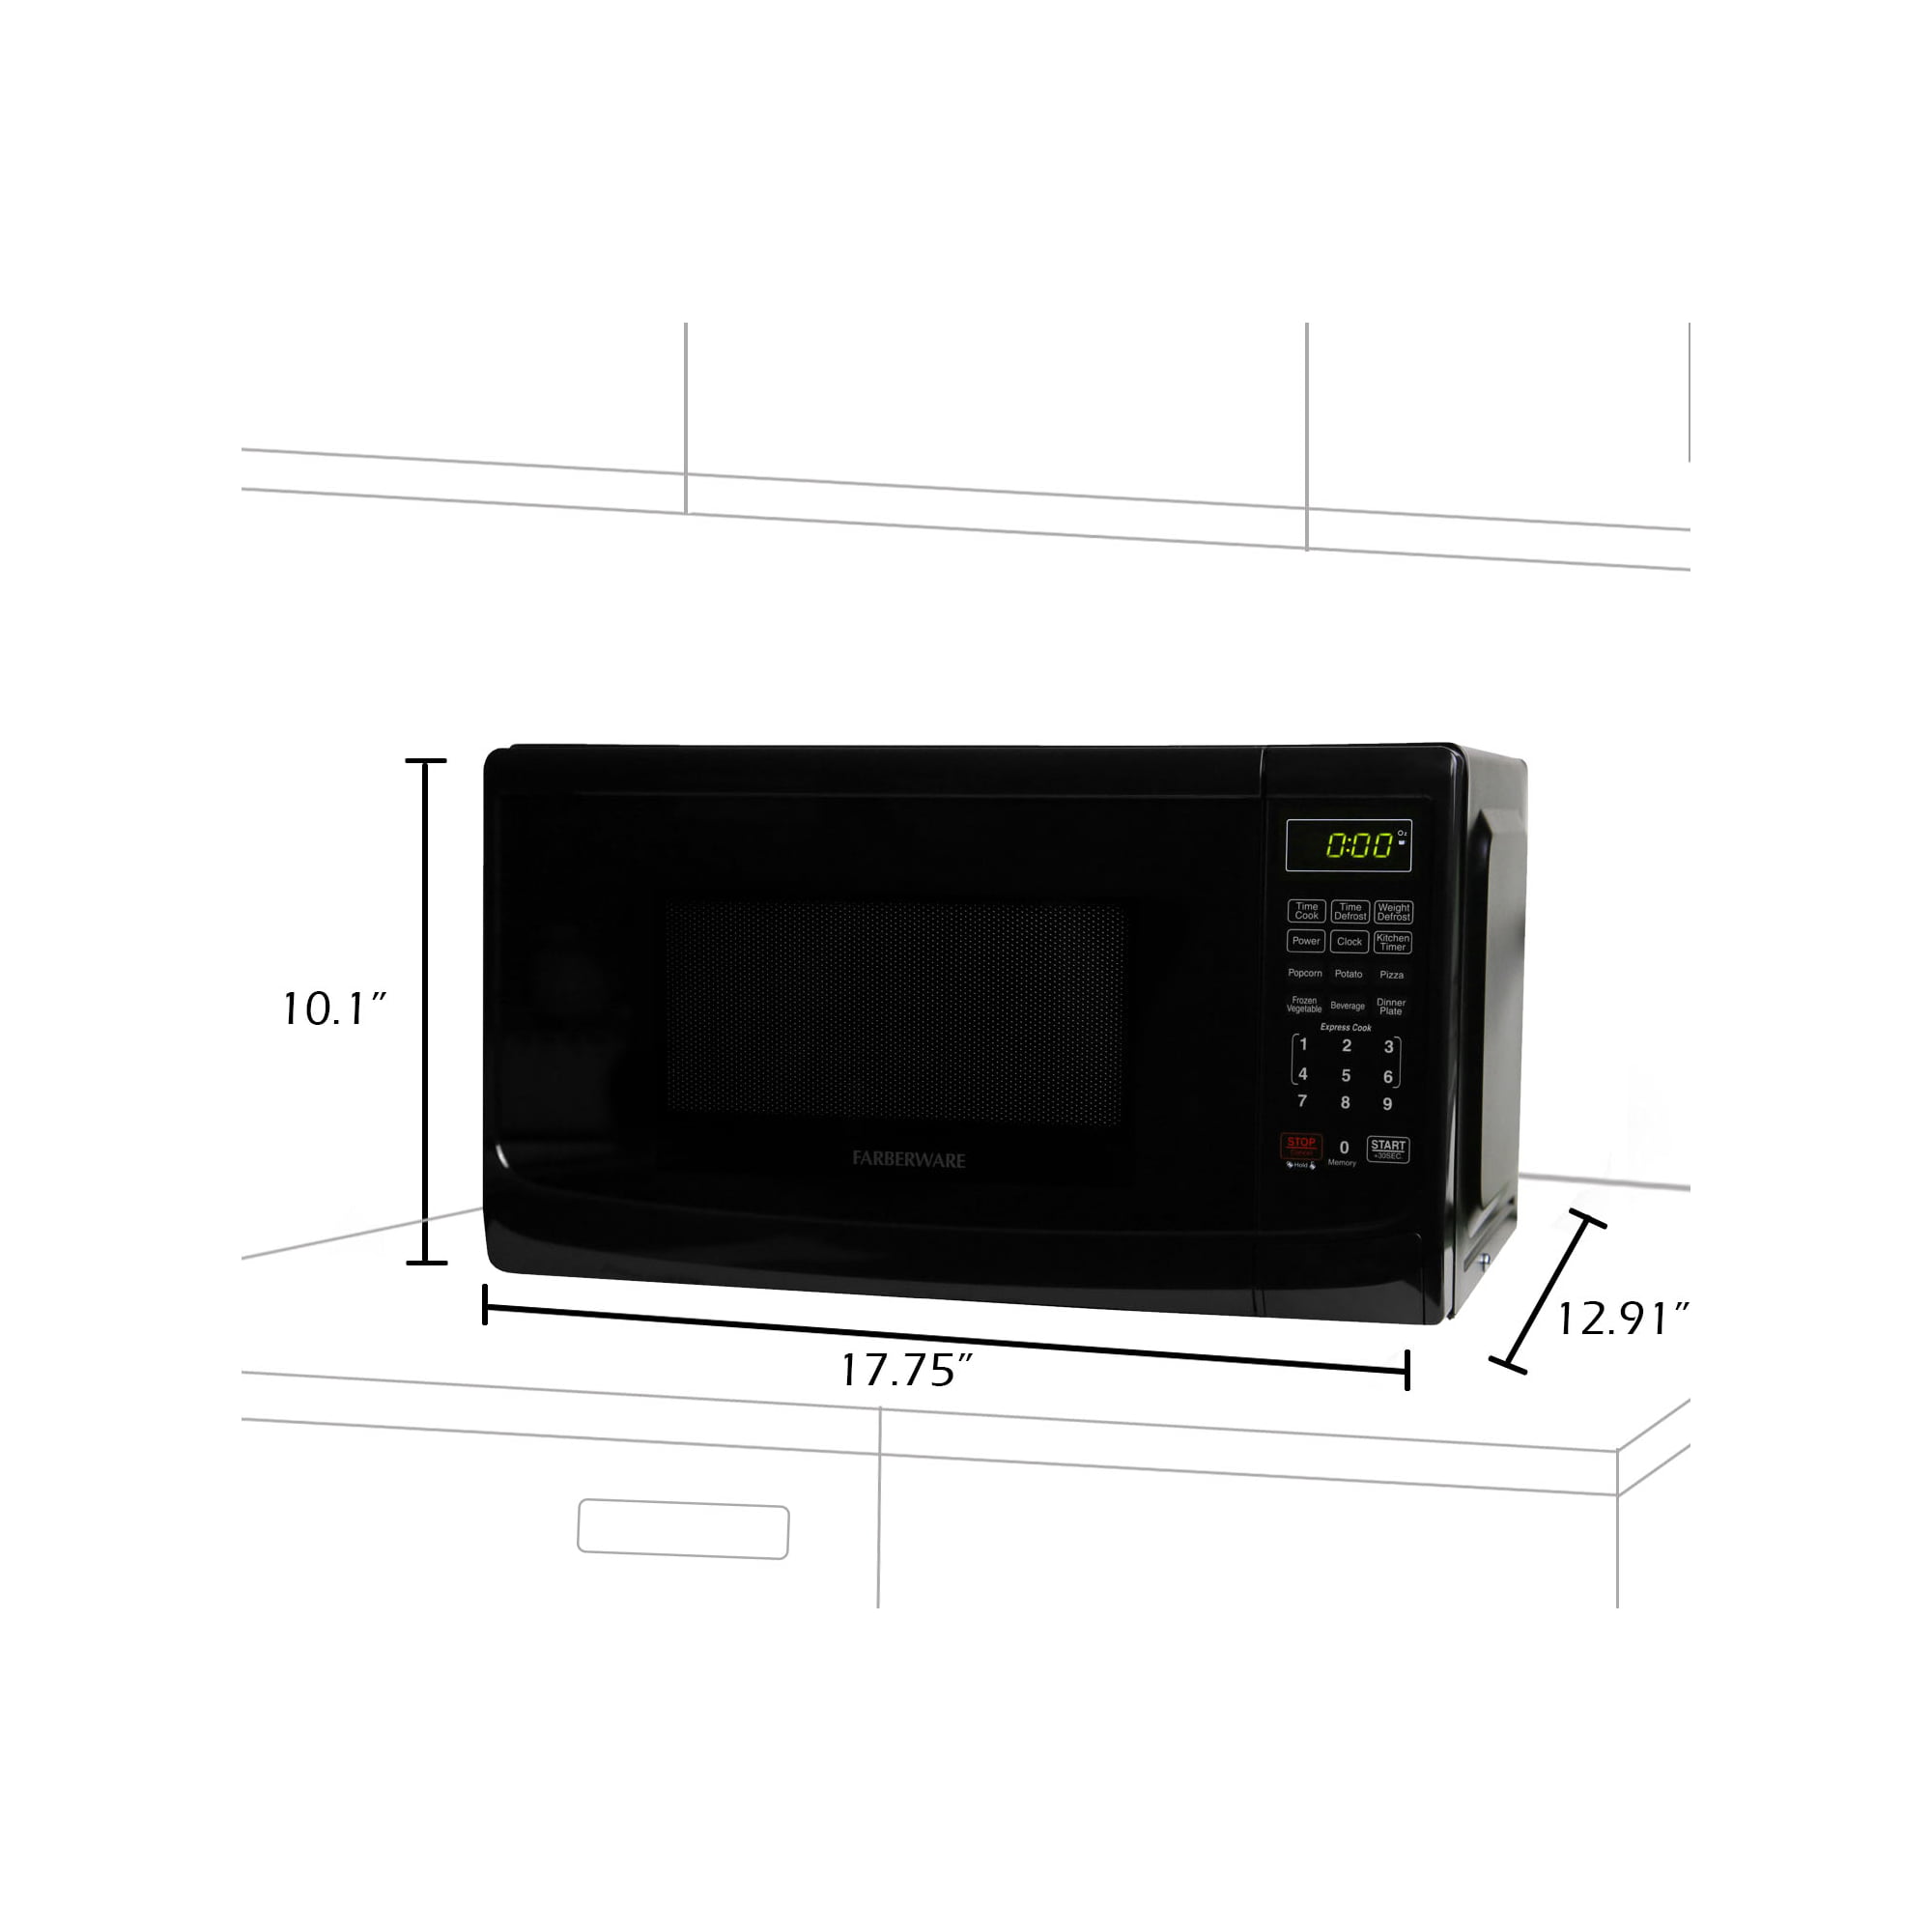 https://themarketdepot.com/wp-content/uploads/2023/01/Farberware-Classic-0.7-cu.-ft.-700W-Microwave-Oven-Black-5.jpeg